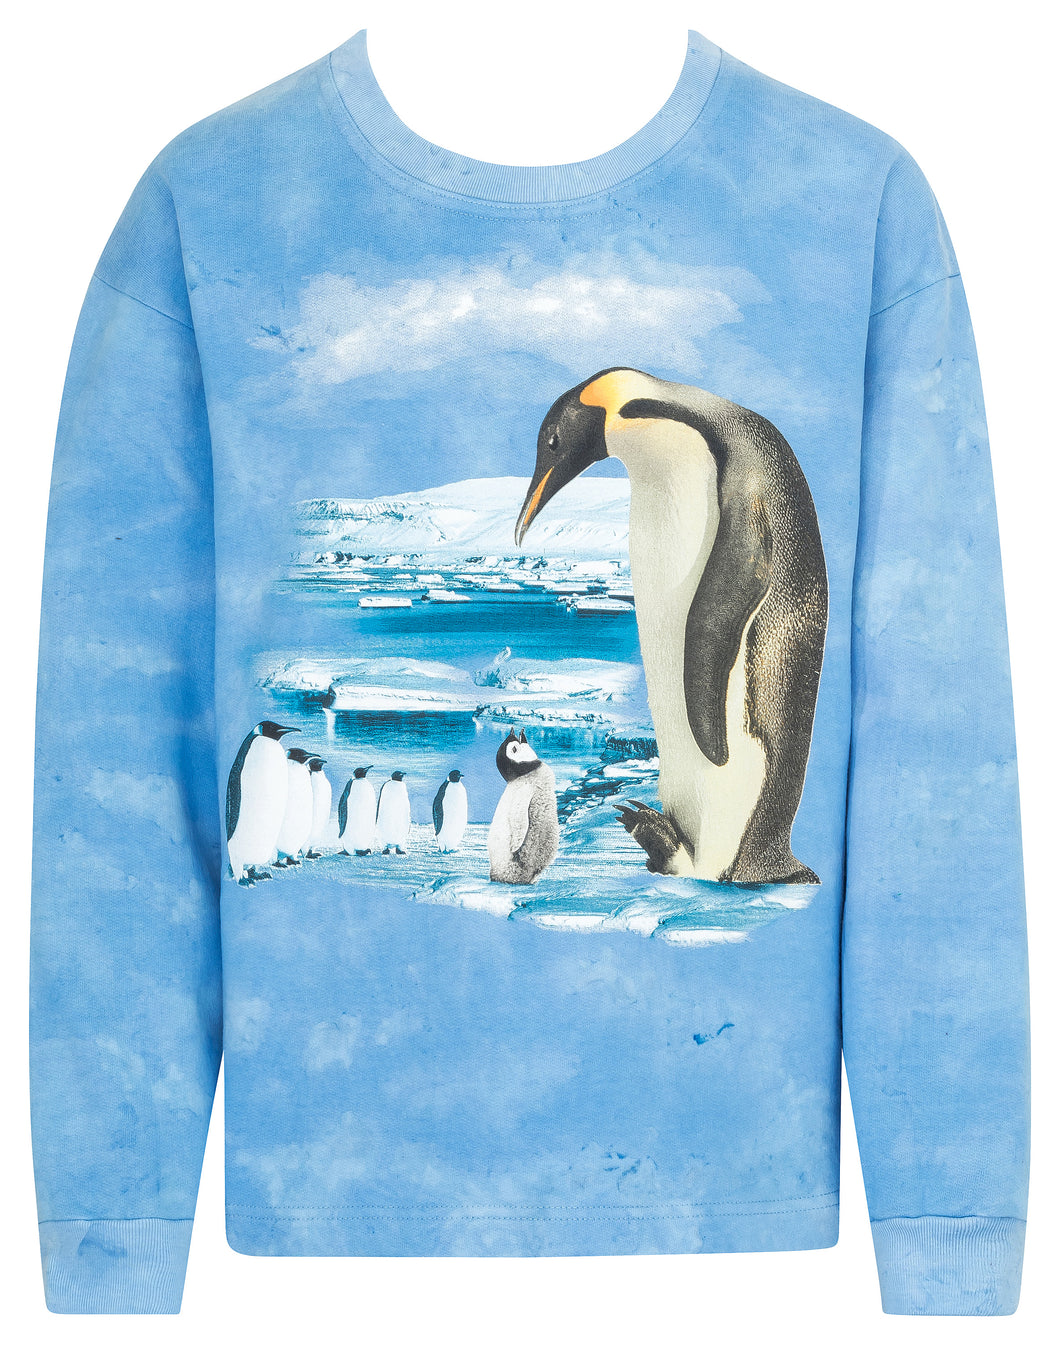 Bushfire Sweatshirt Kinder Pinguine, blau BSWK051